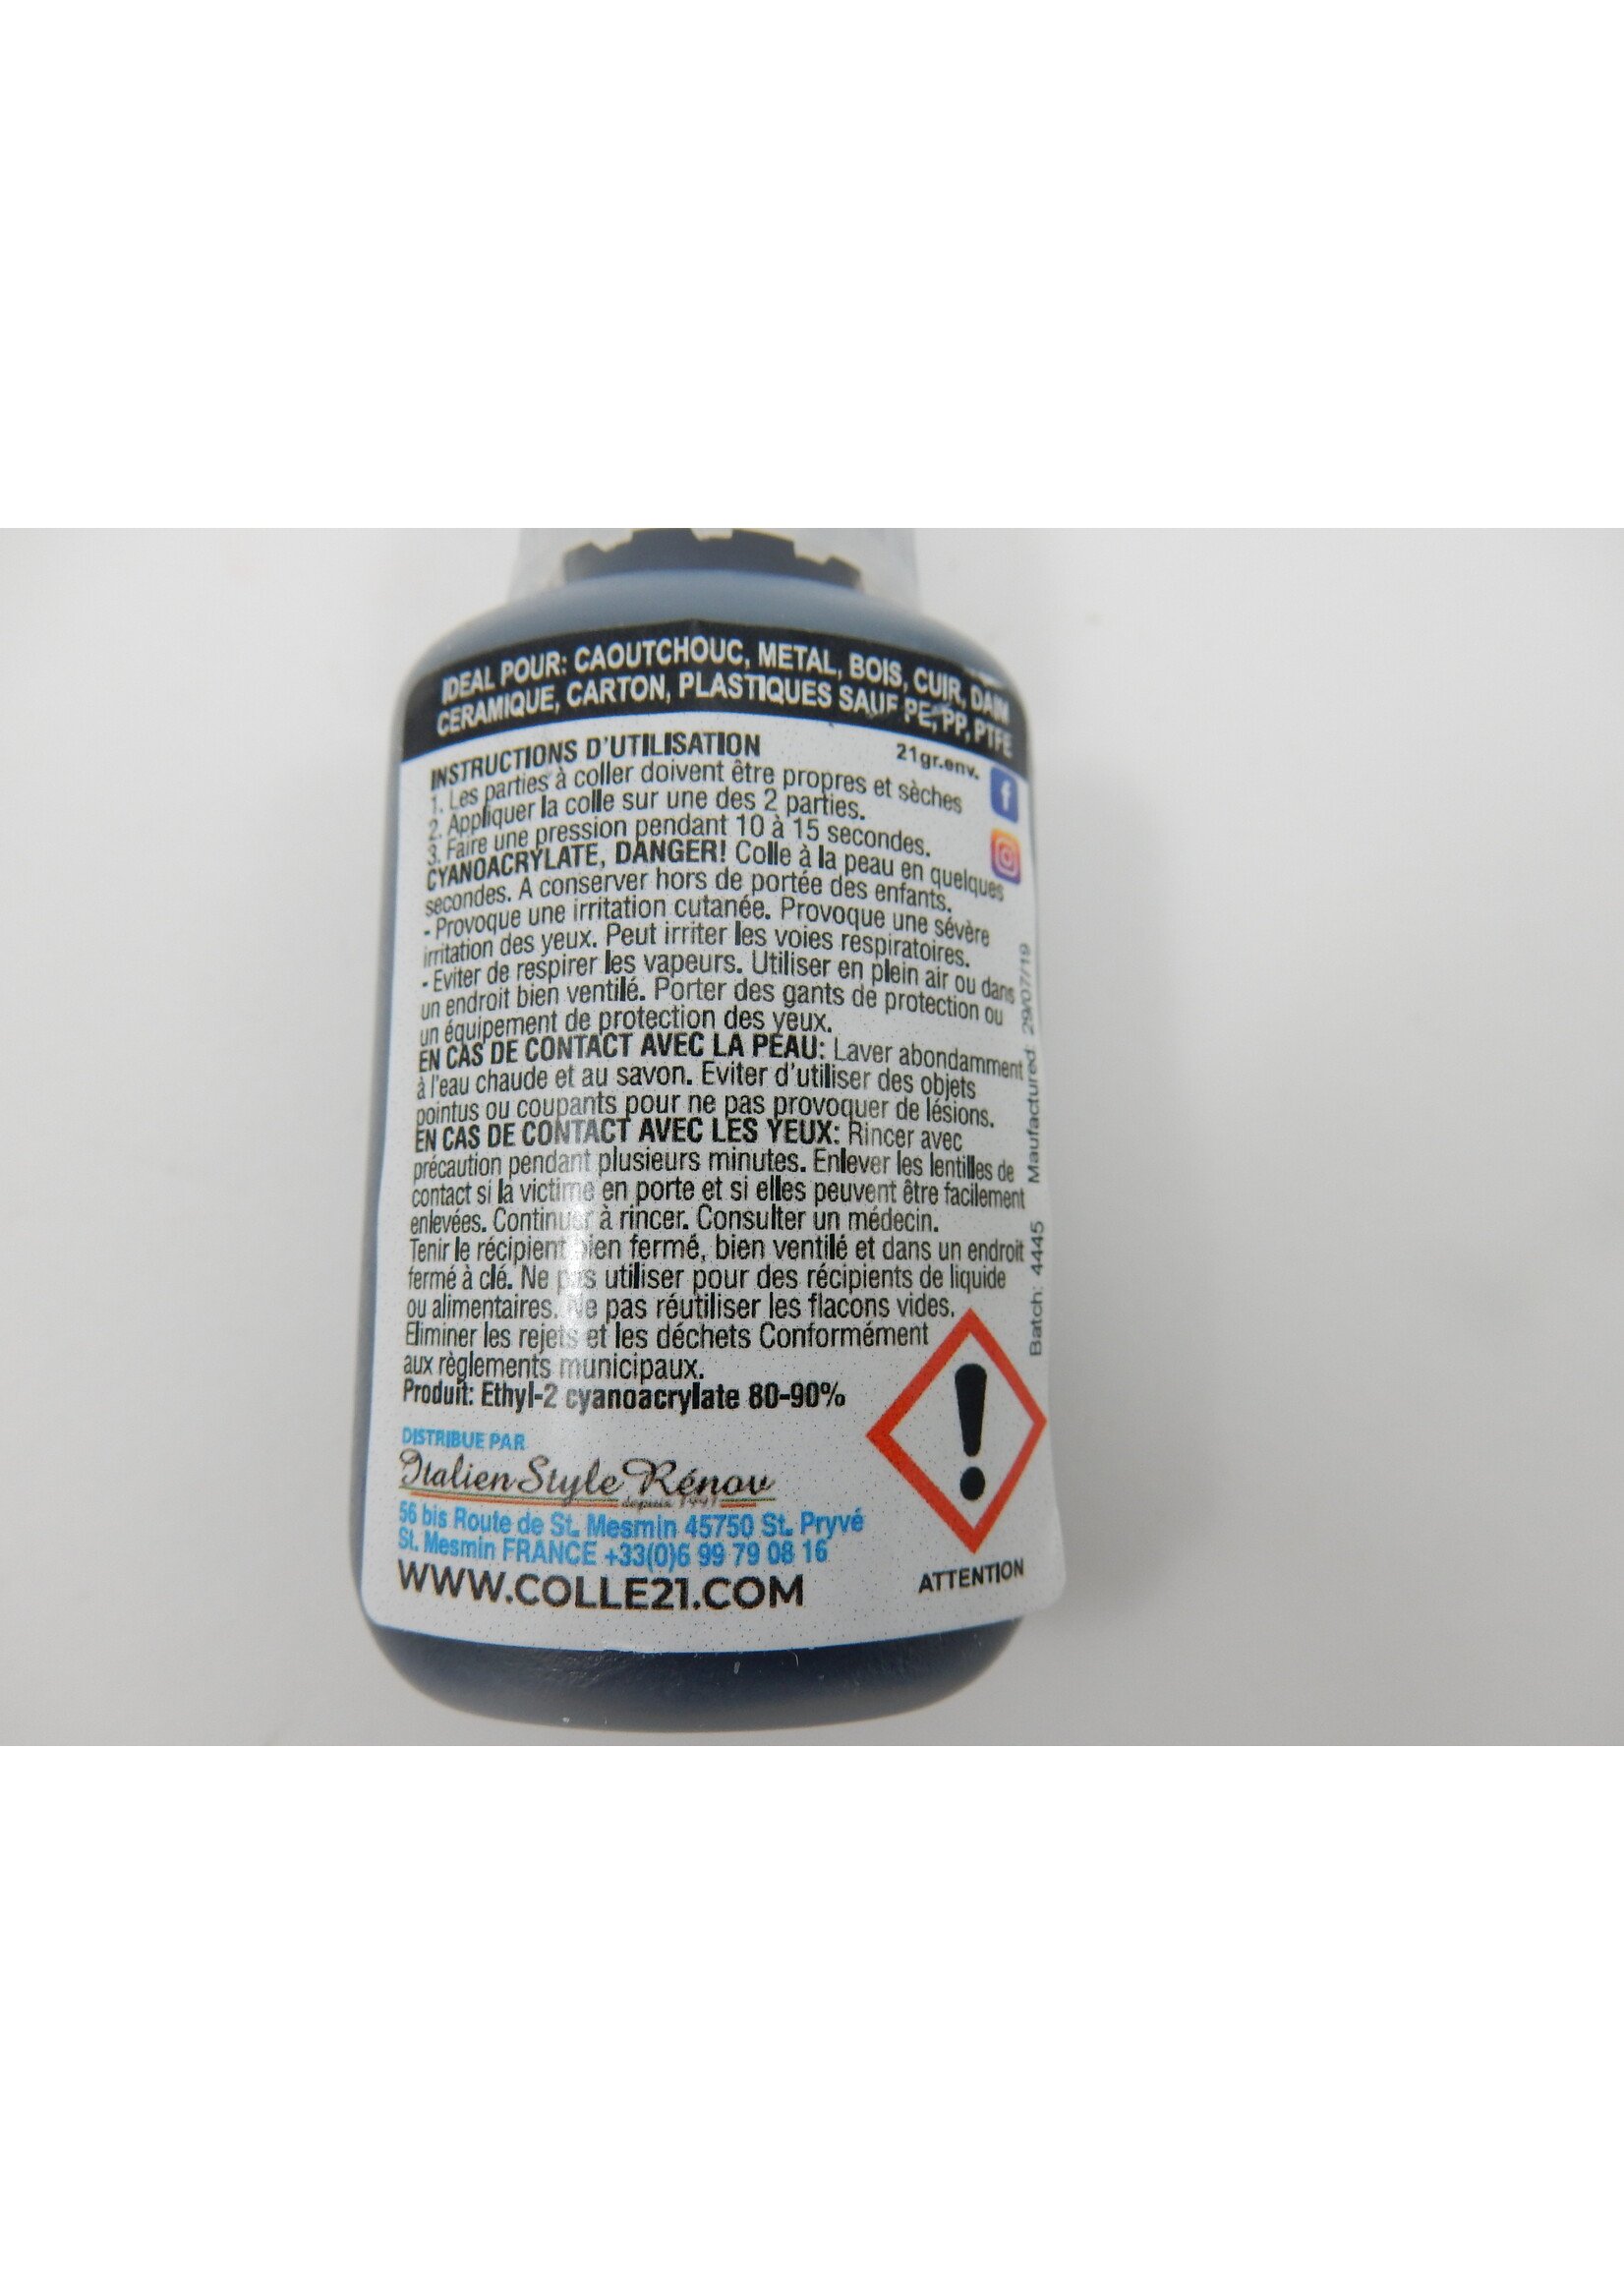 Colle 21 anaerobic cyanoacrylate glue - 21 gram - Copy